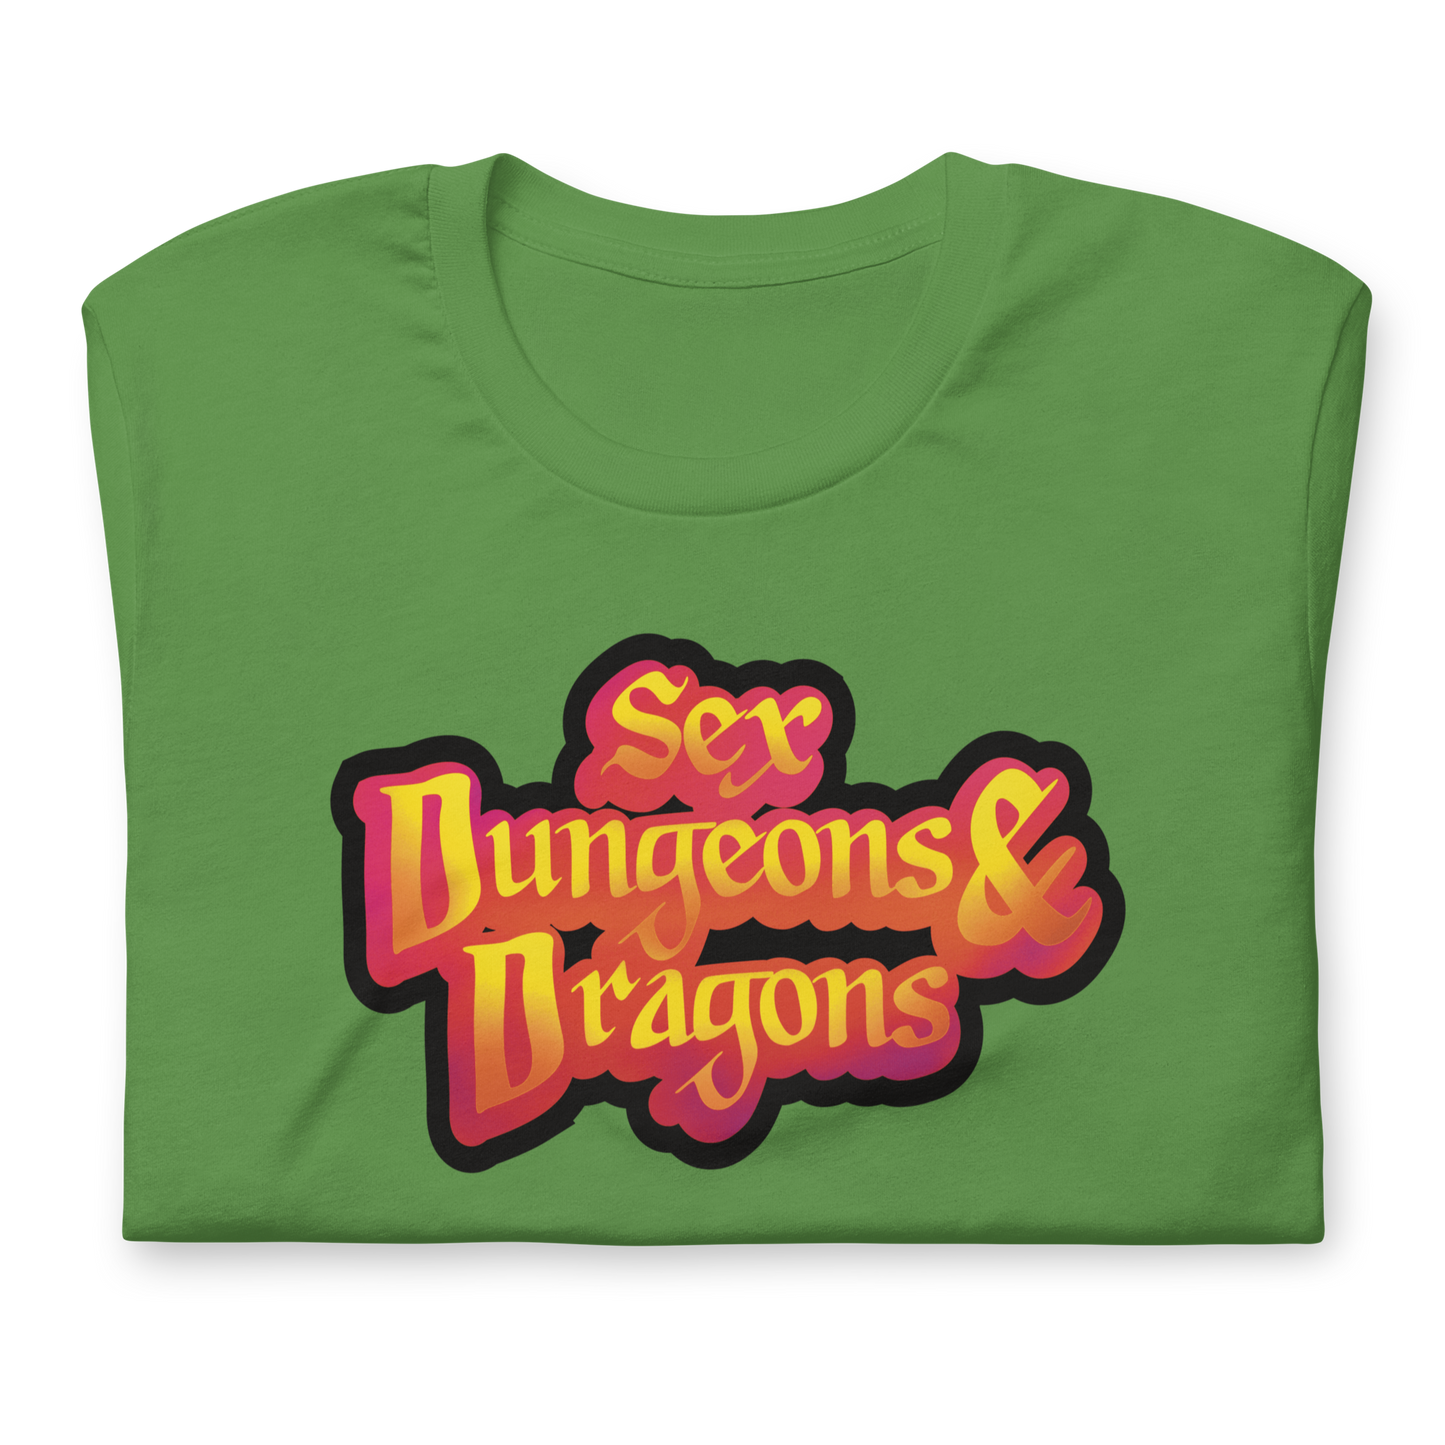 Sex-Dungeons & Dragons Shirt